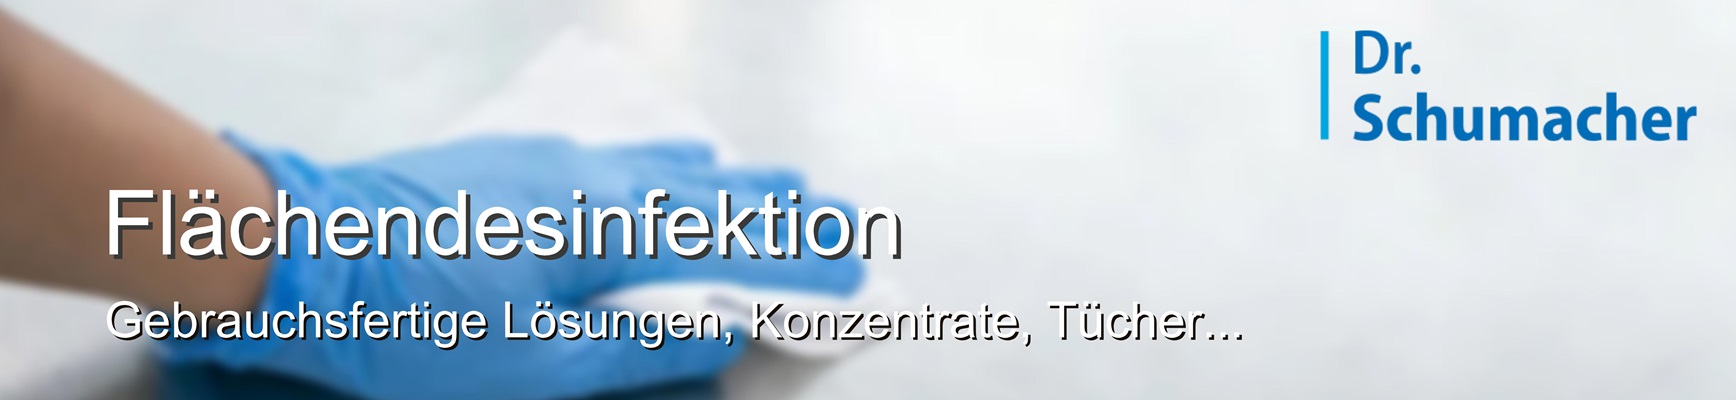 Kategorie-Bellasan-Fl-chendesinfektion-Dr-Schumacher-Shop_klb